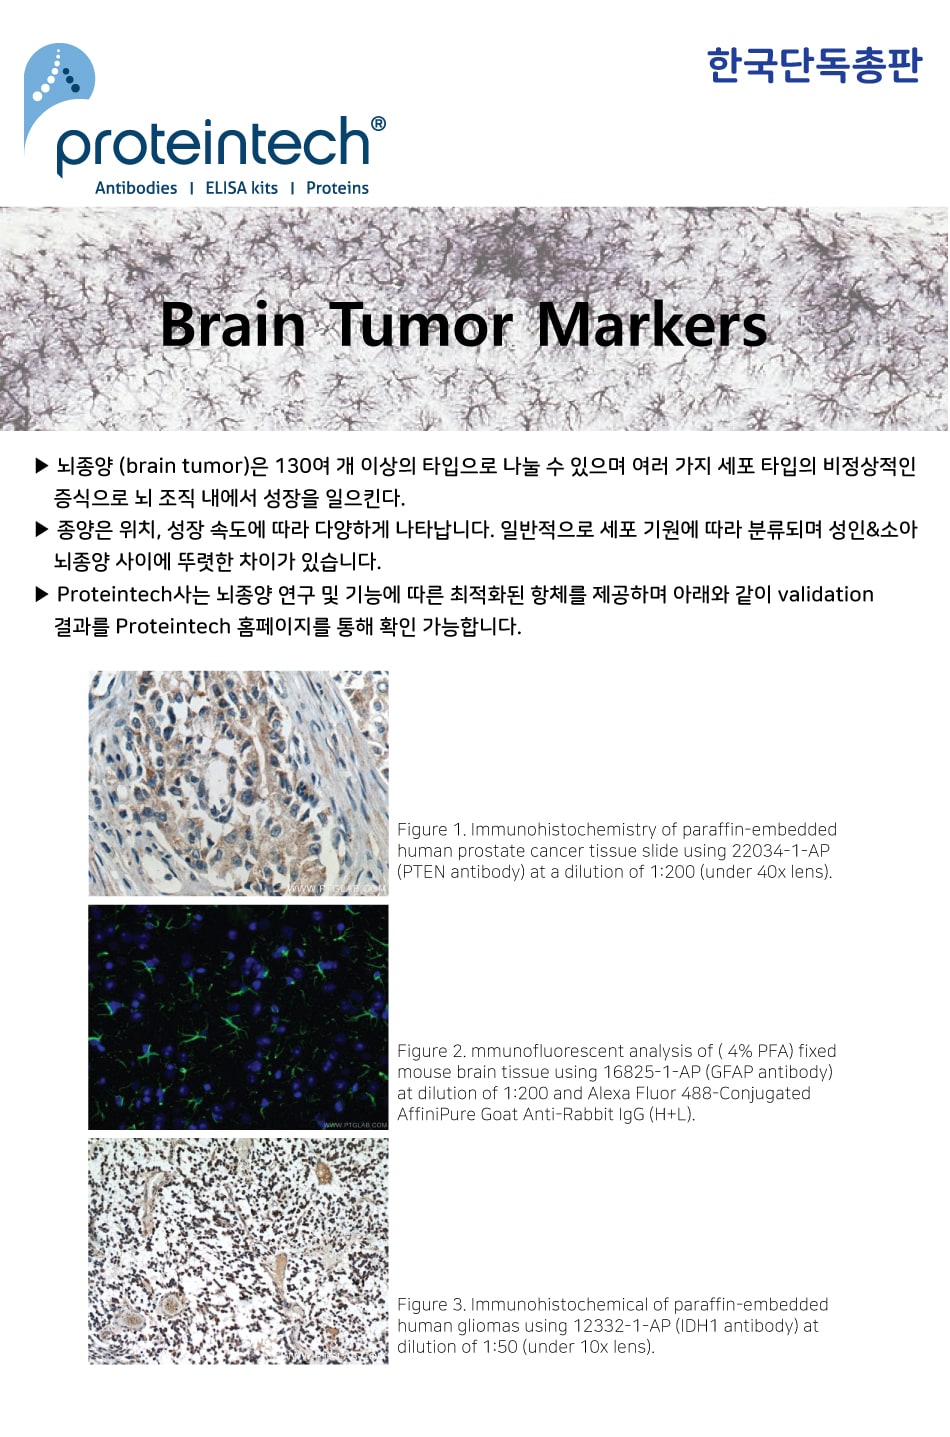 proteintech 뇌종양 마커 항체 소개